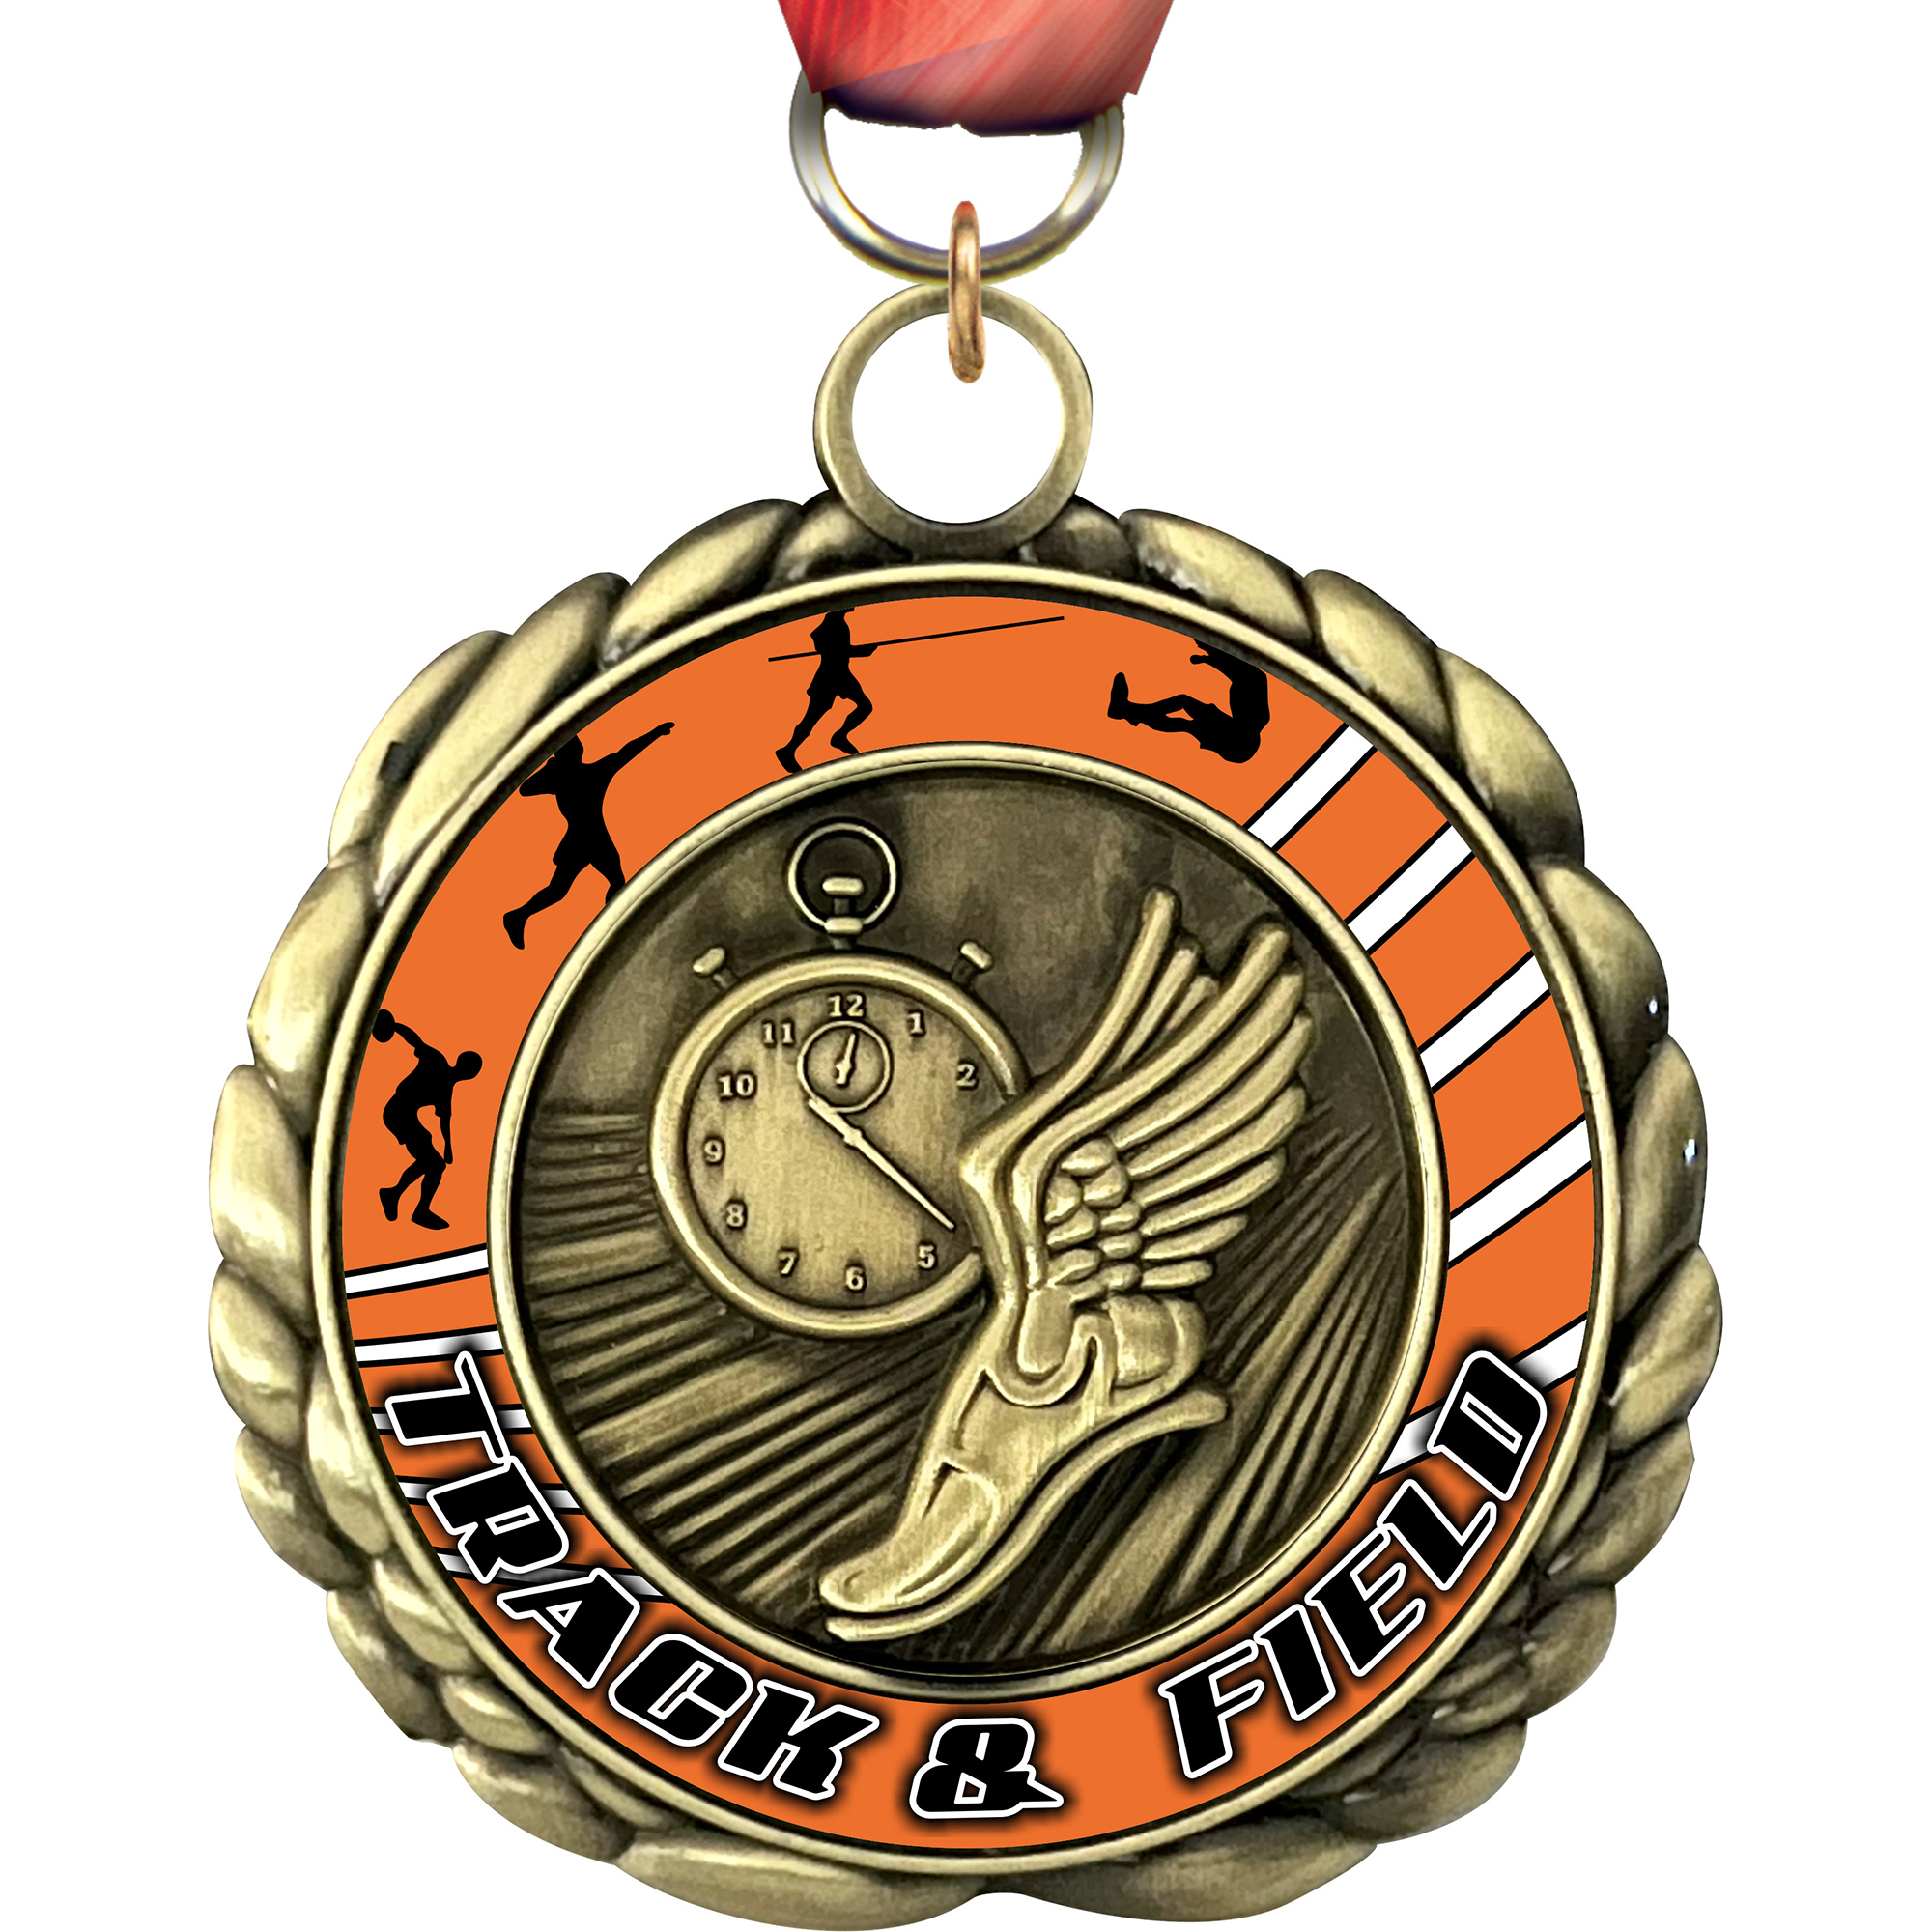 Track Wraparoundz Insert Medal